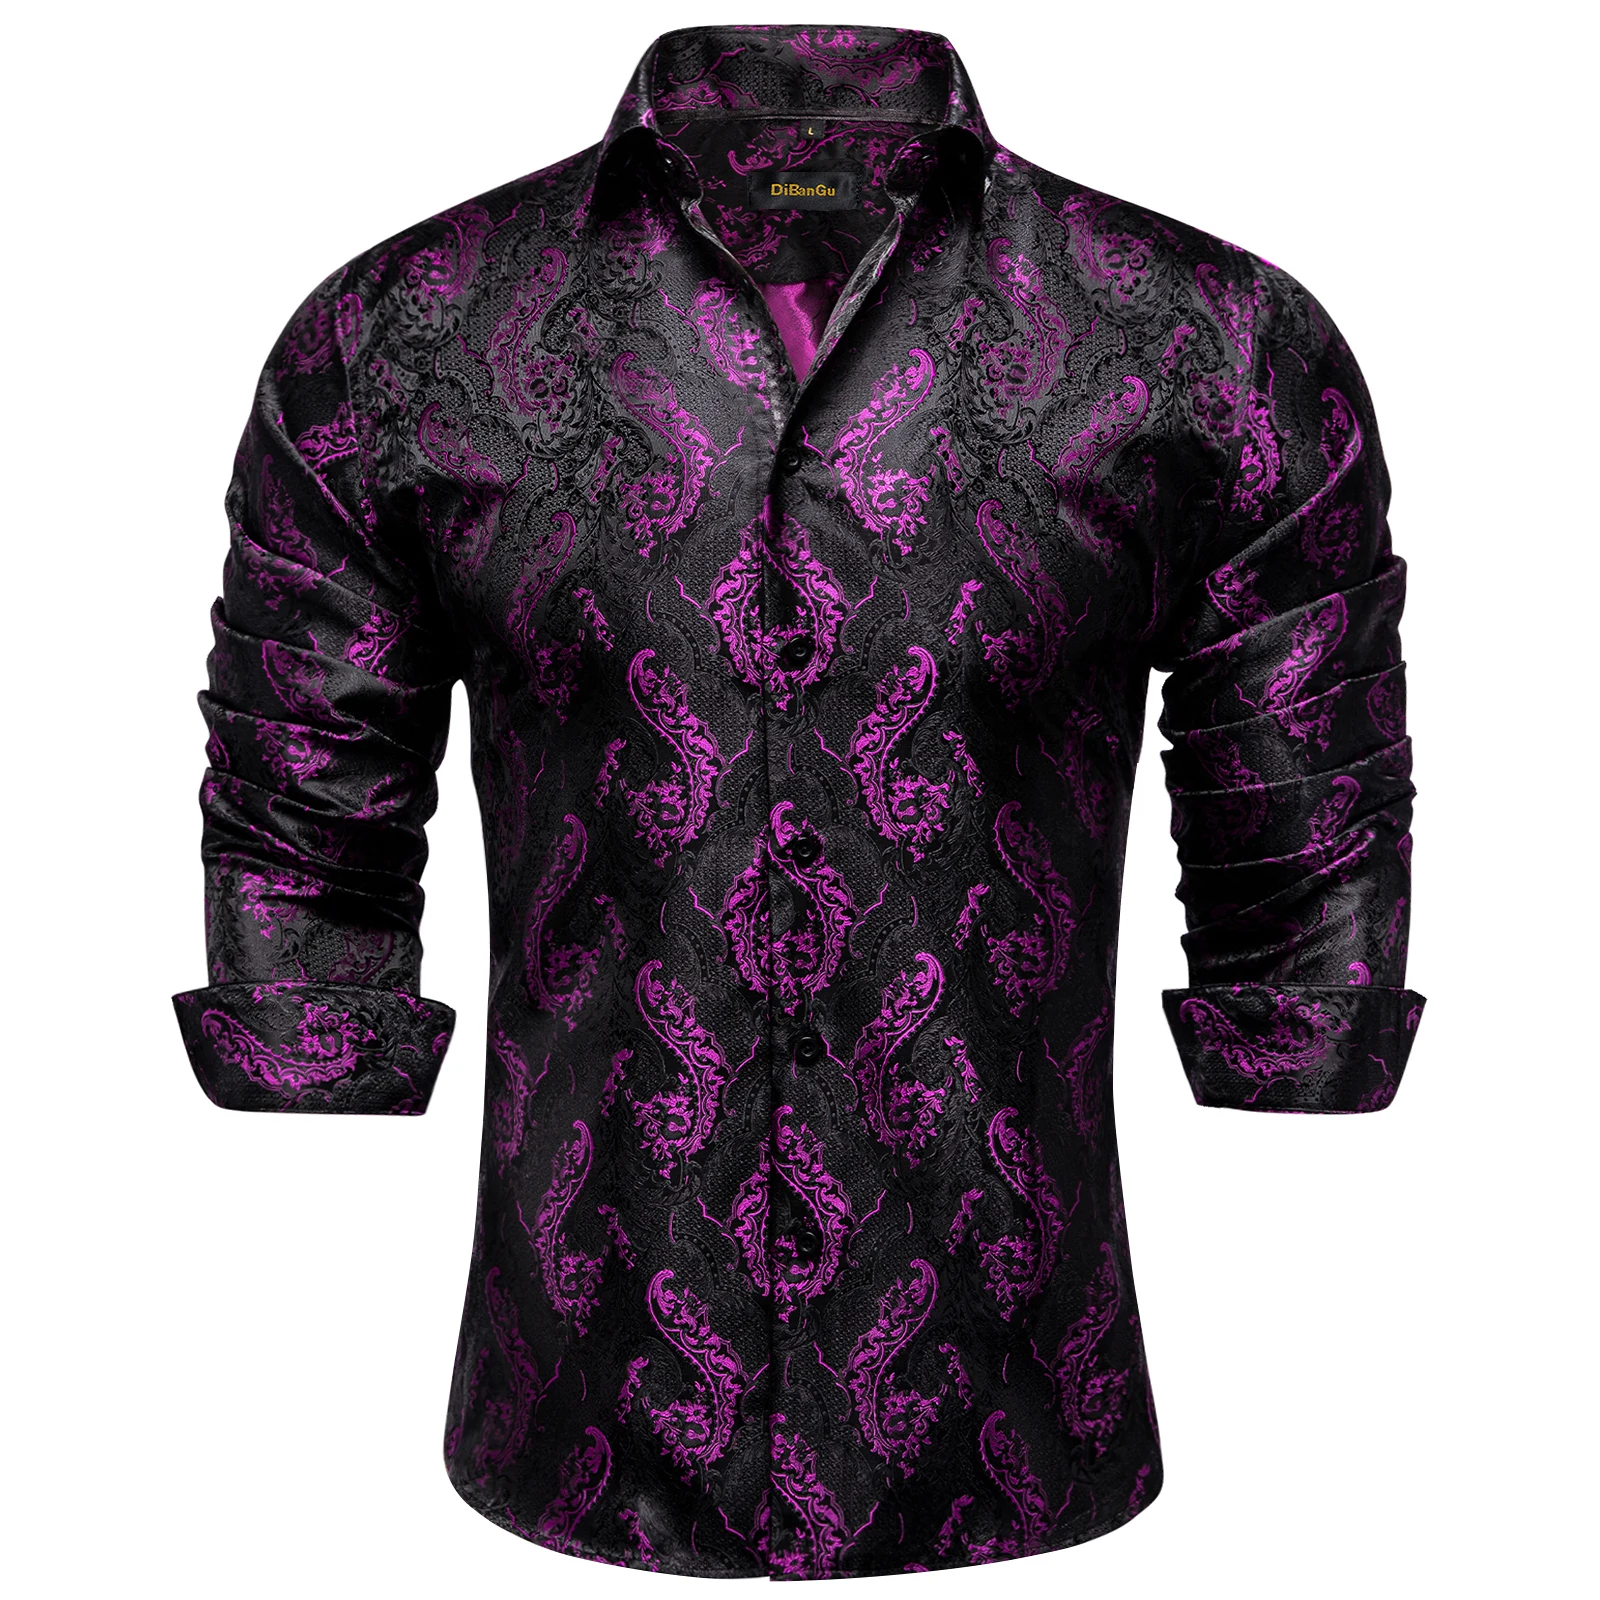 Luxury Purple Paisley Black Long Sleeve Silk Shirts for Men Tuxedo Wedding Party Social Dress Shirt Brand Men Clothing DiBanGu